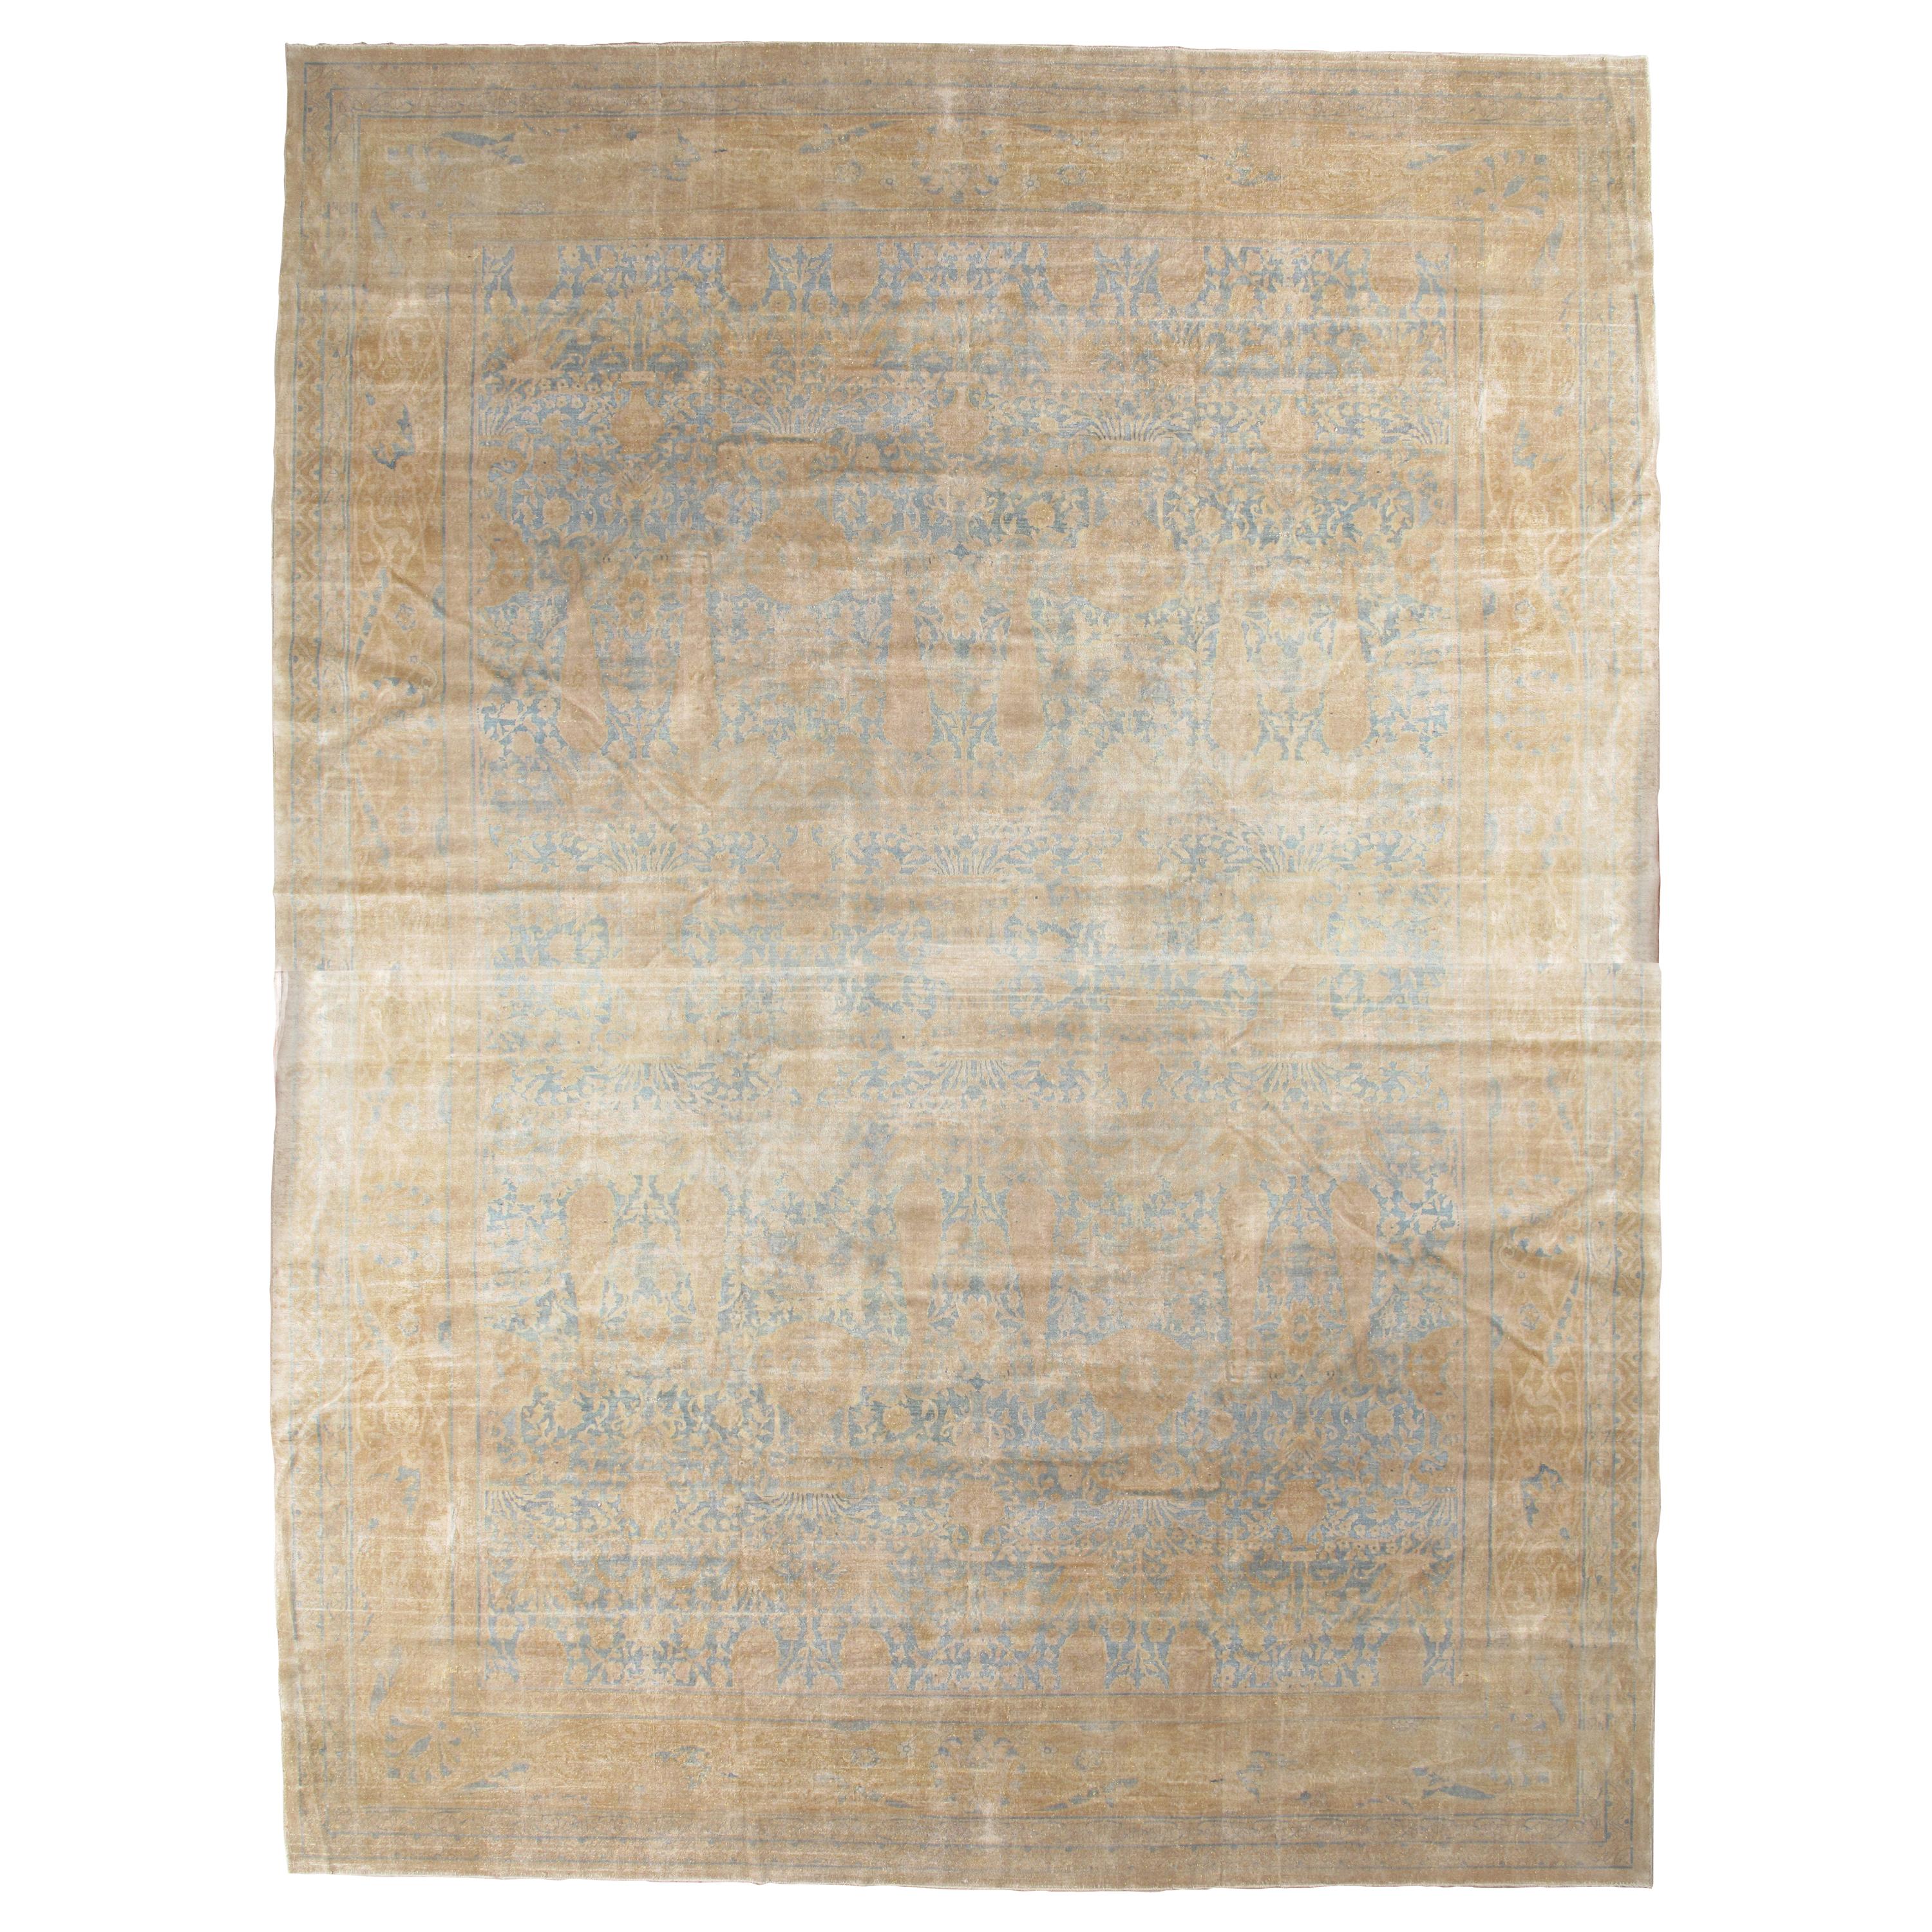 Antique Indian Agra Carpet, Handmade Oriental Rug, Light Blue, Gold, Ivory, Soft